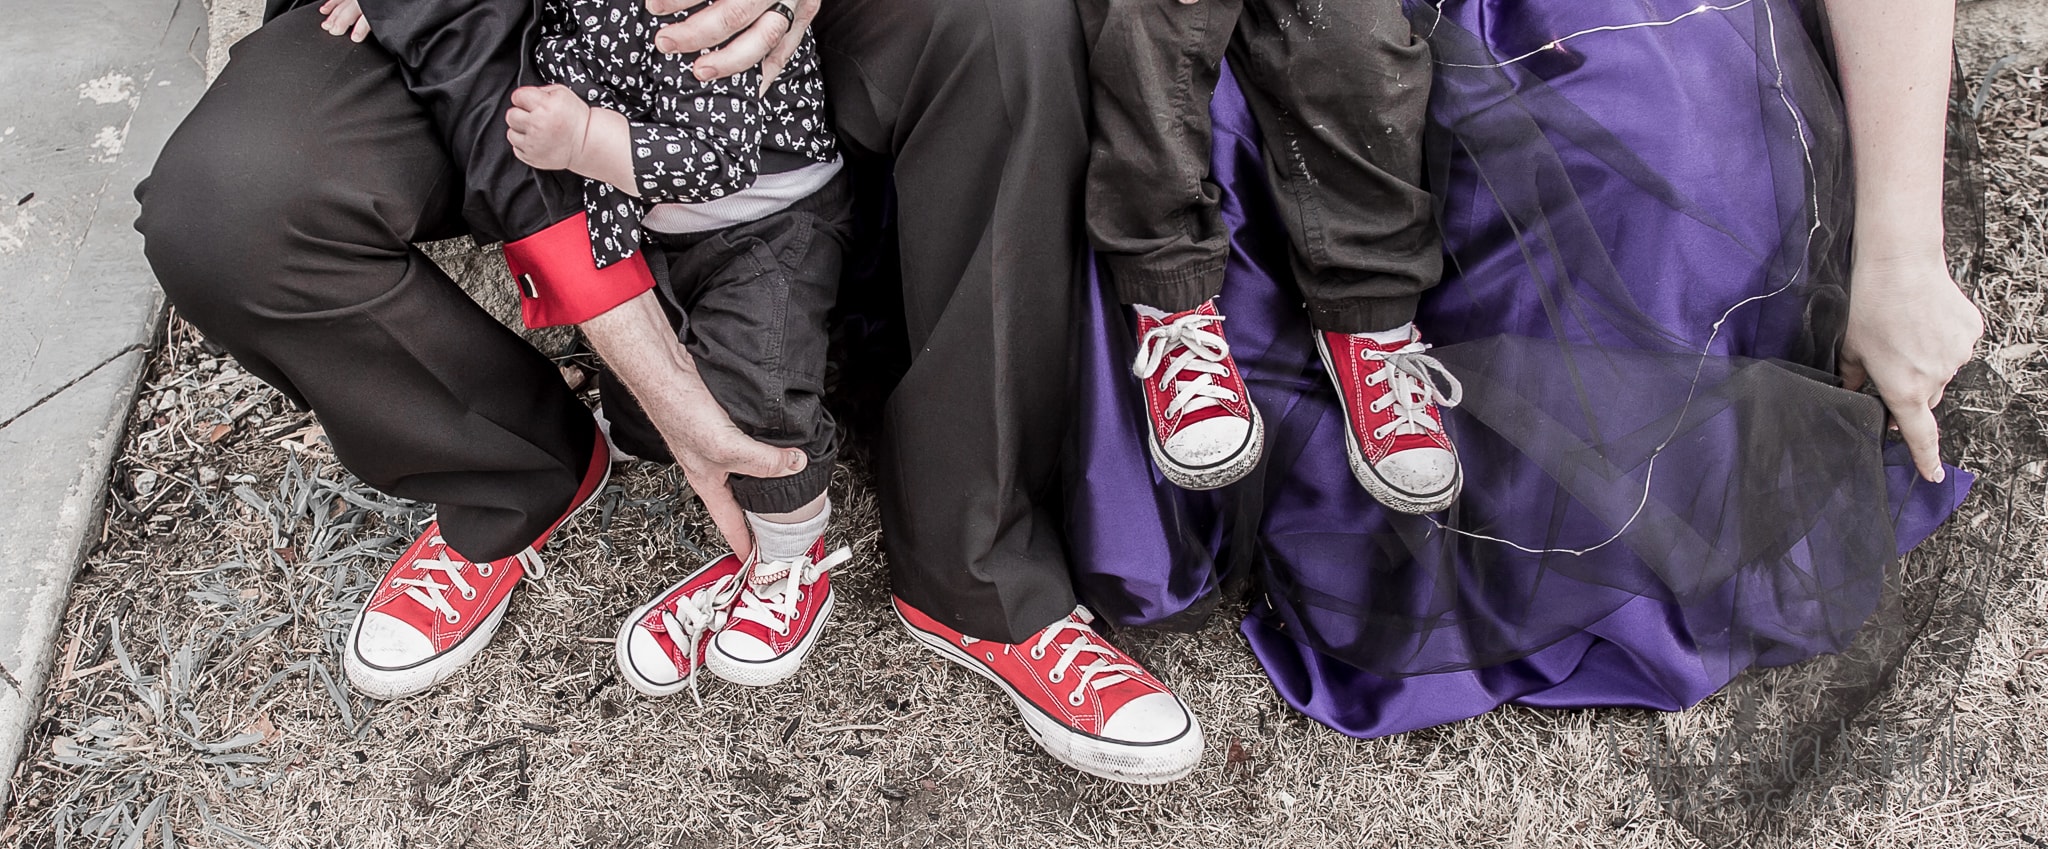 red shoes purple wedding dress